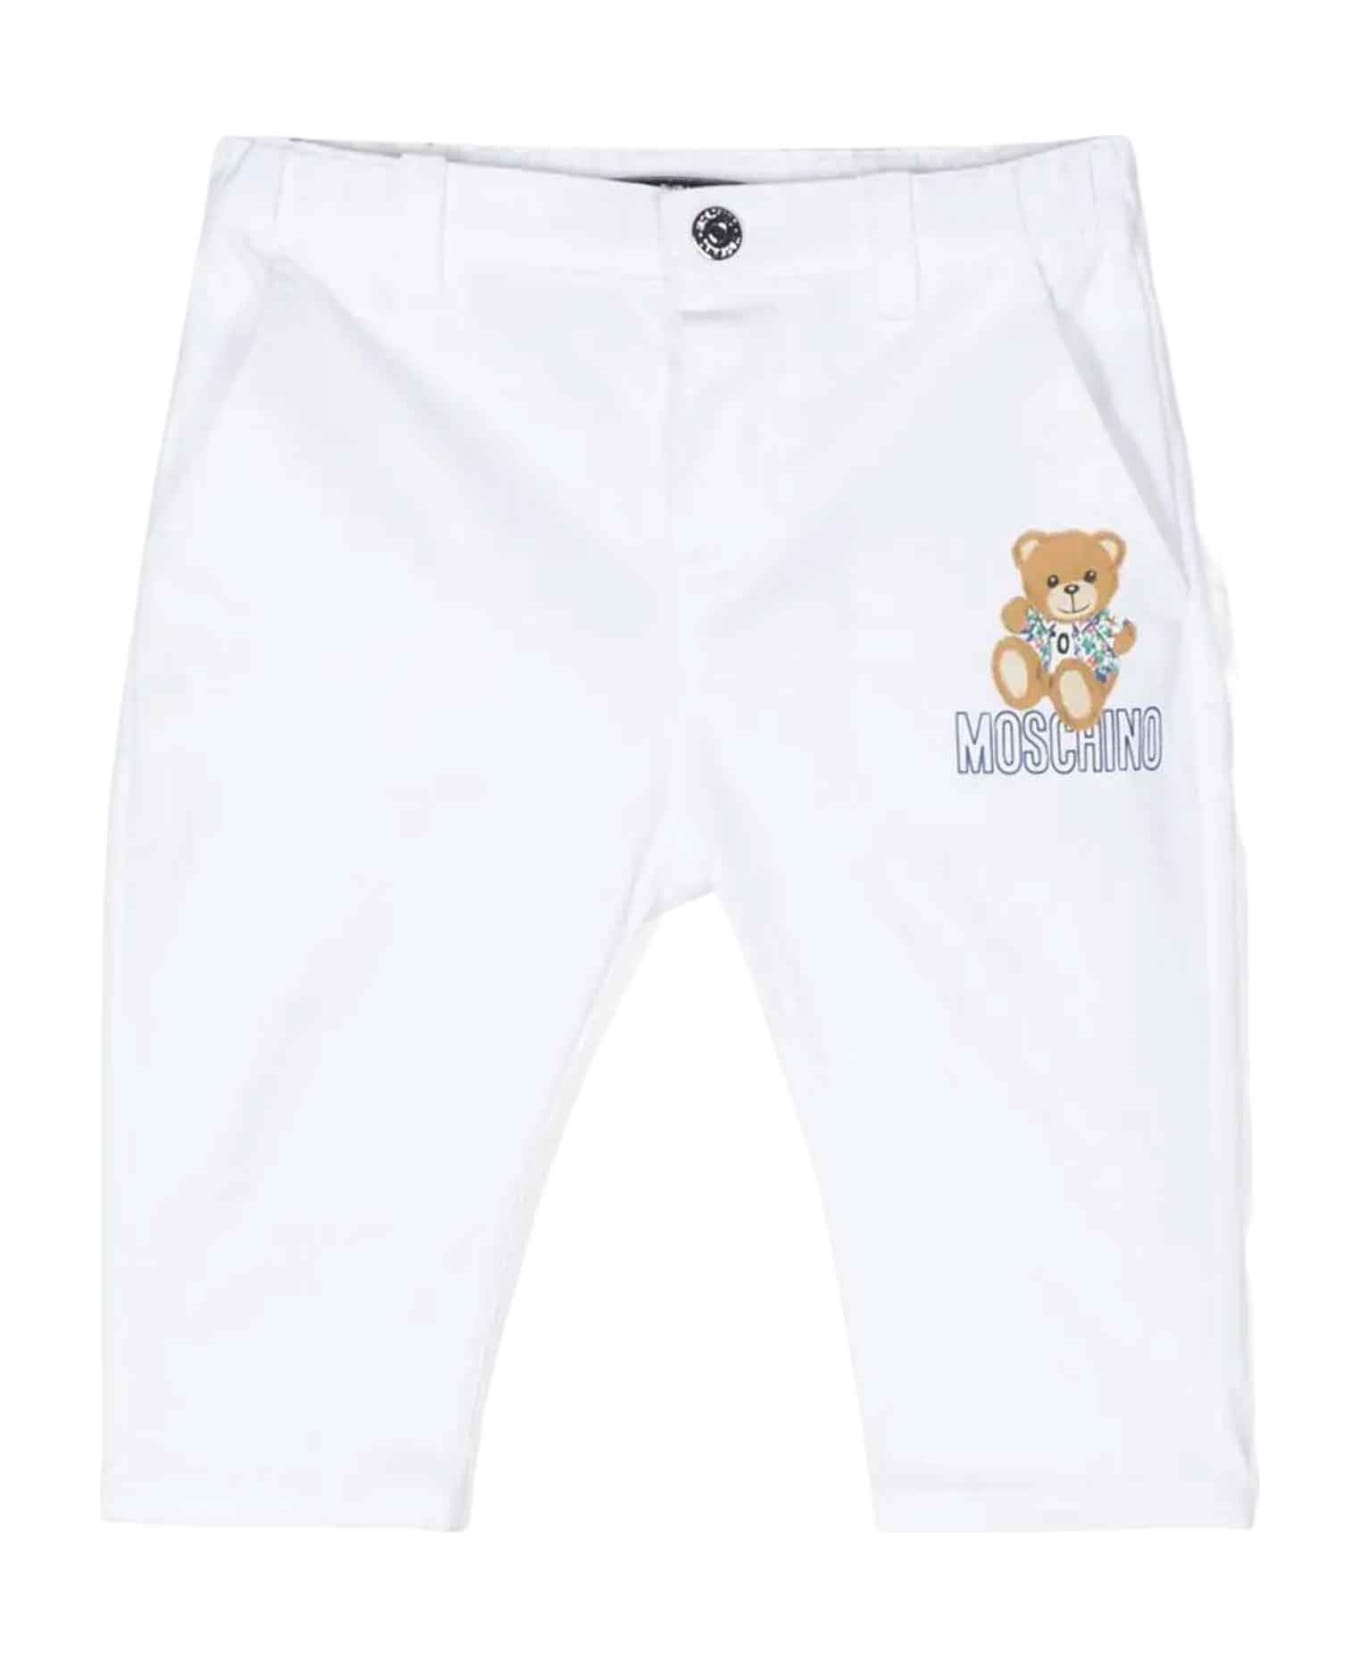 Moschino White Trousers Baby Unisex - Bianco ボトムス